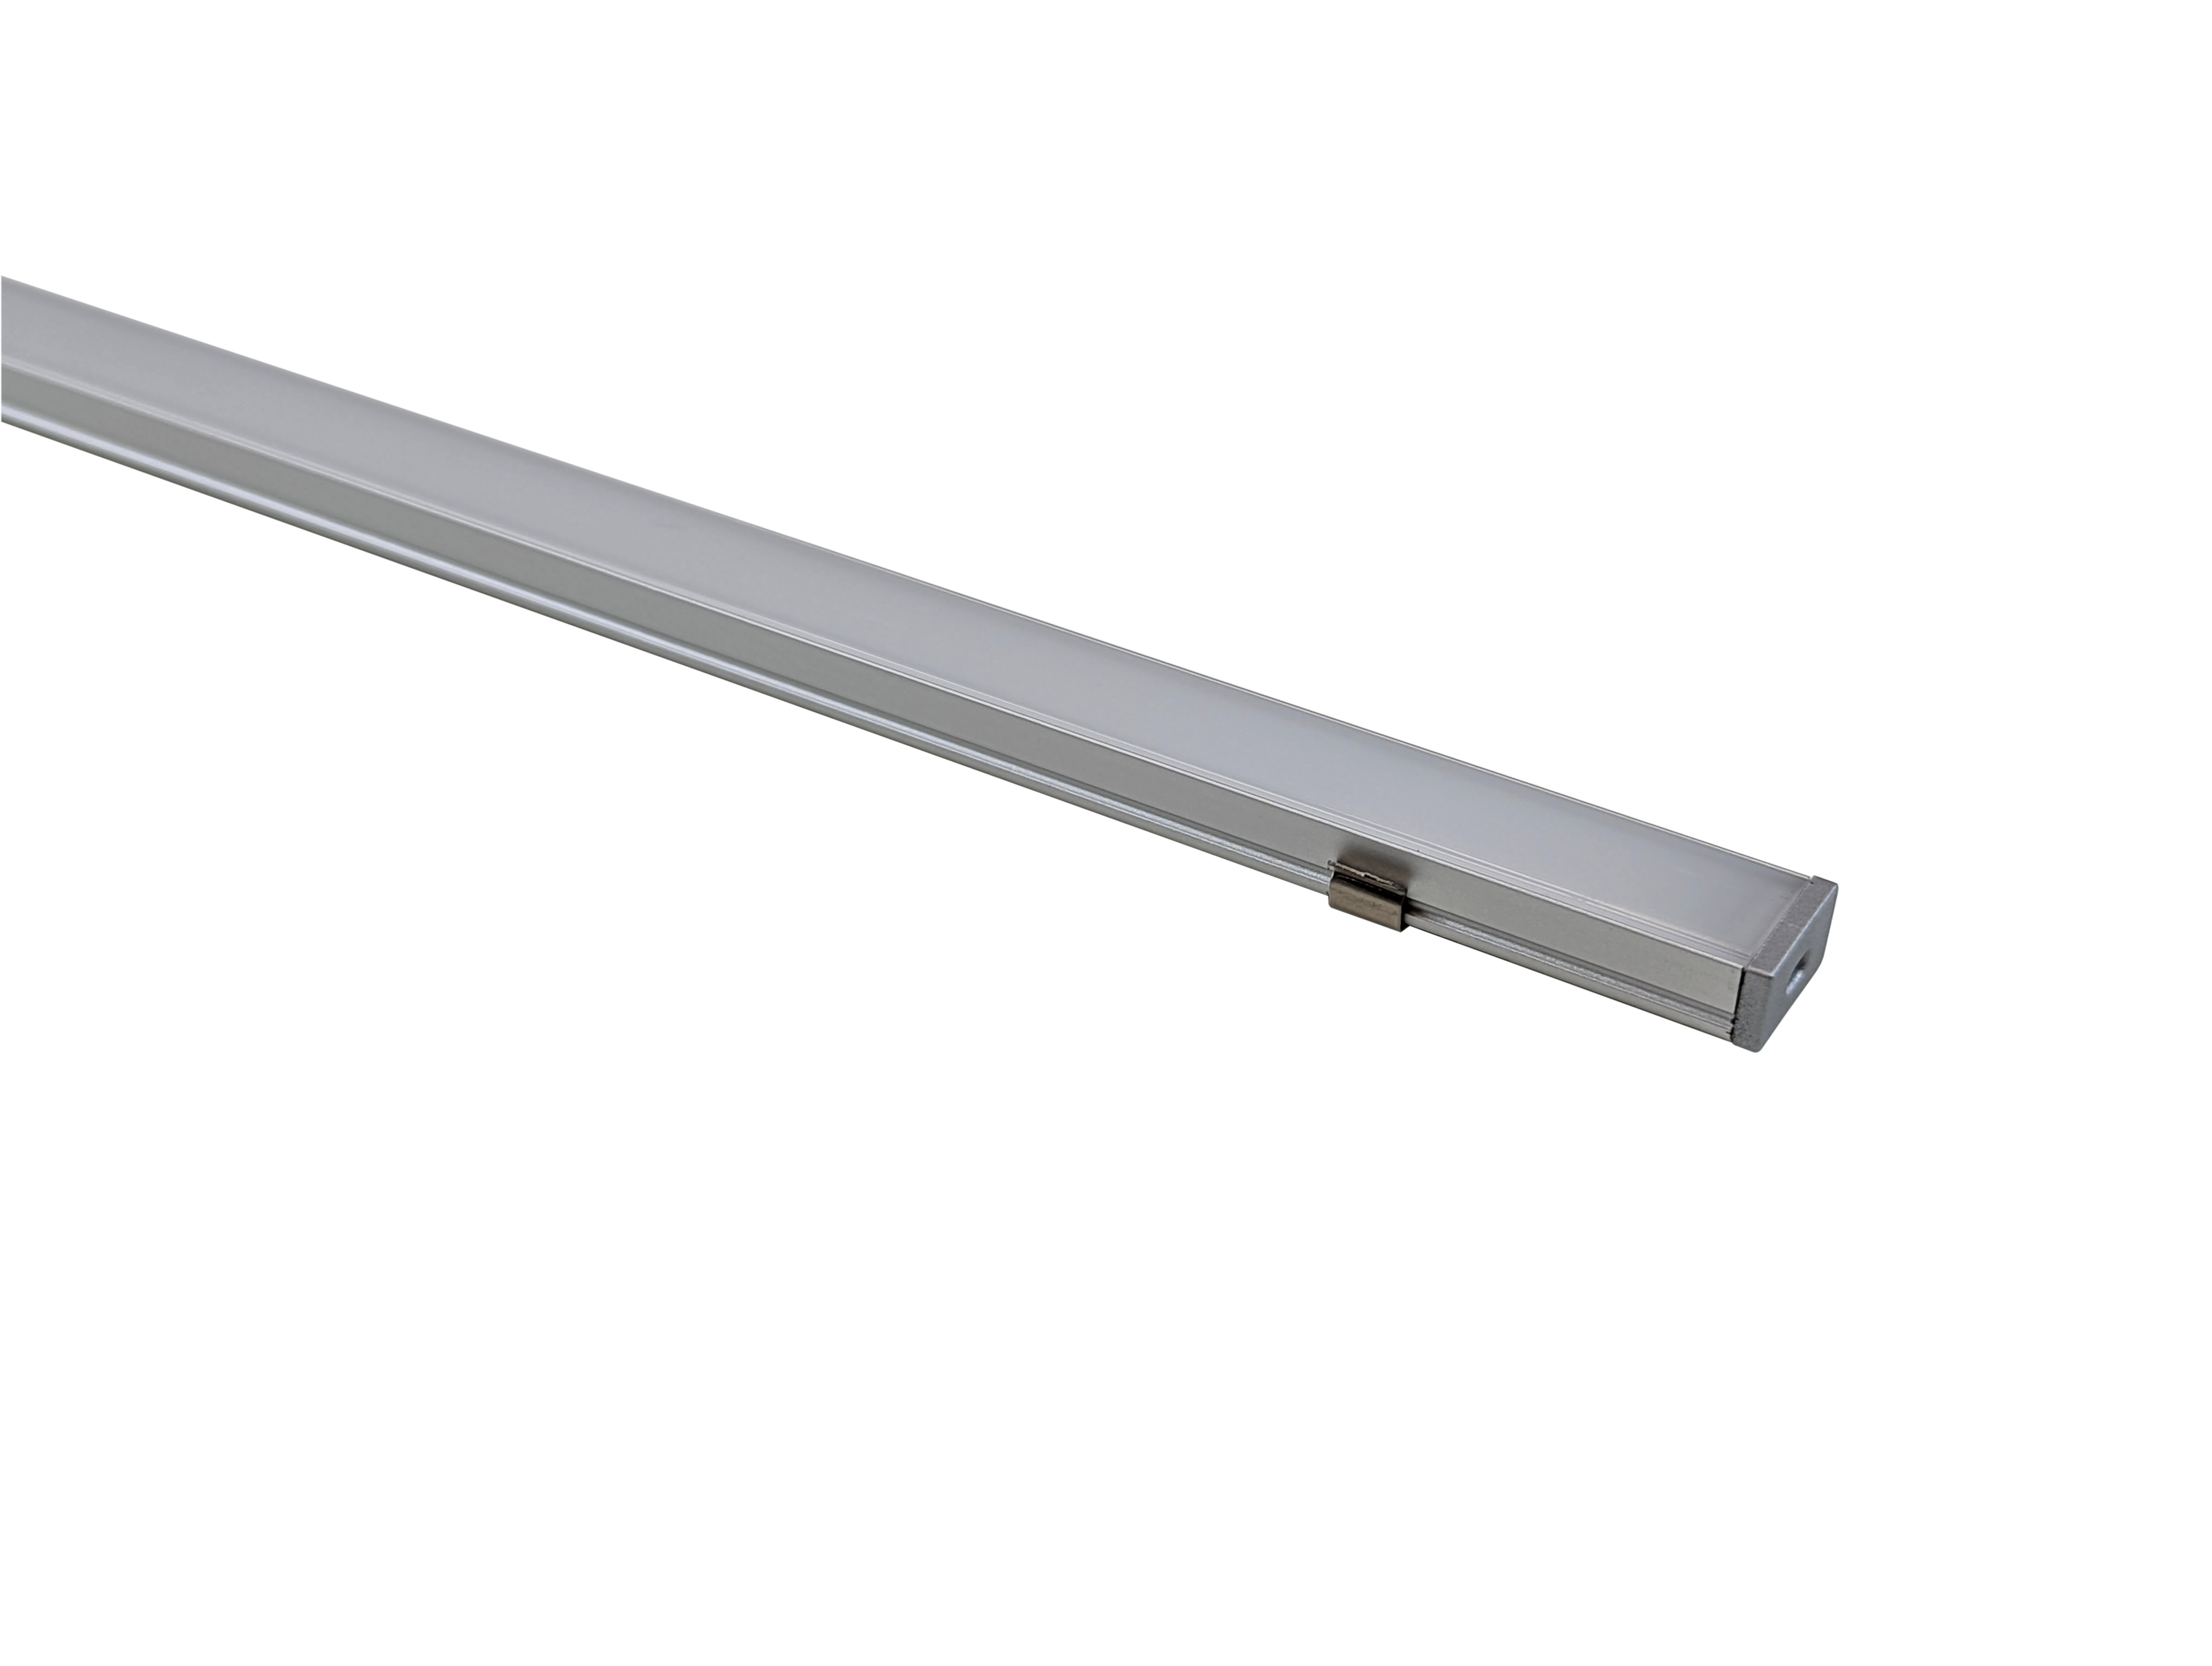 L&S Lighting Cali HI-112 24V LED Strip Light, Non-Standard Color Temps